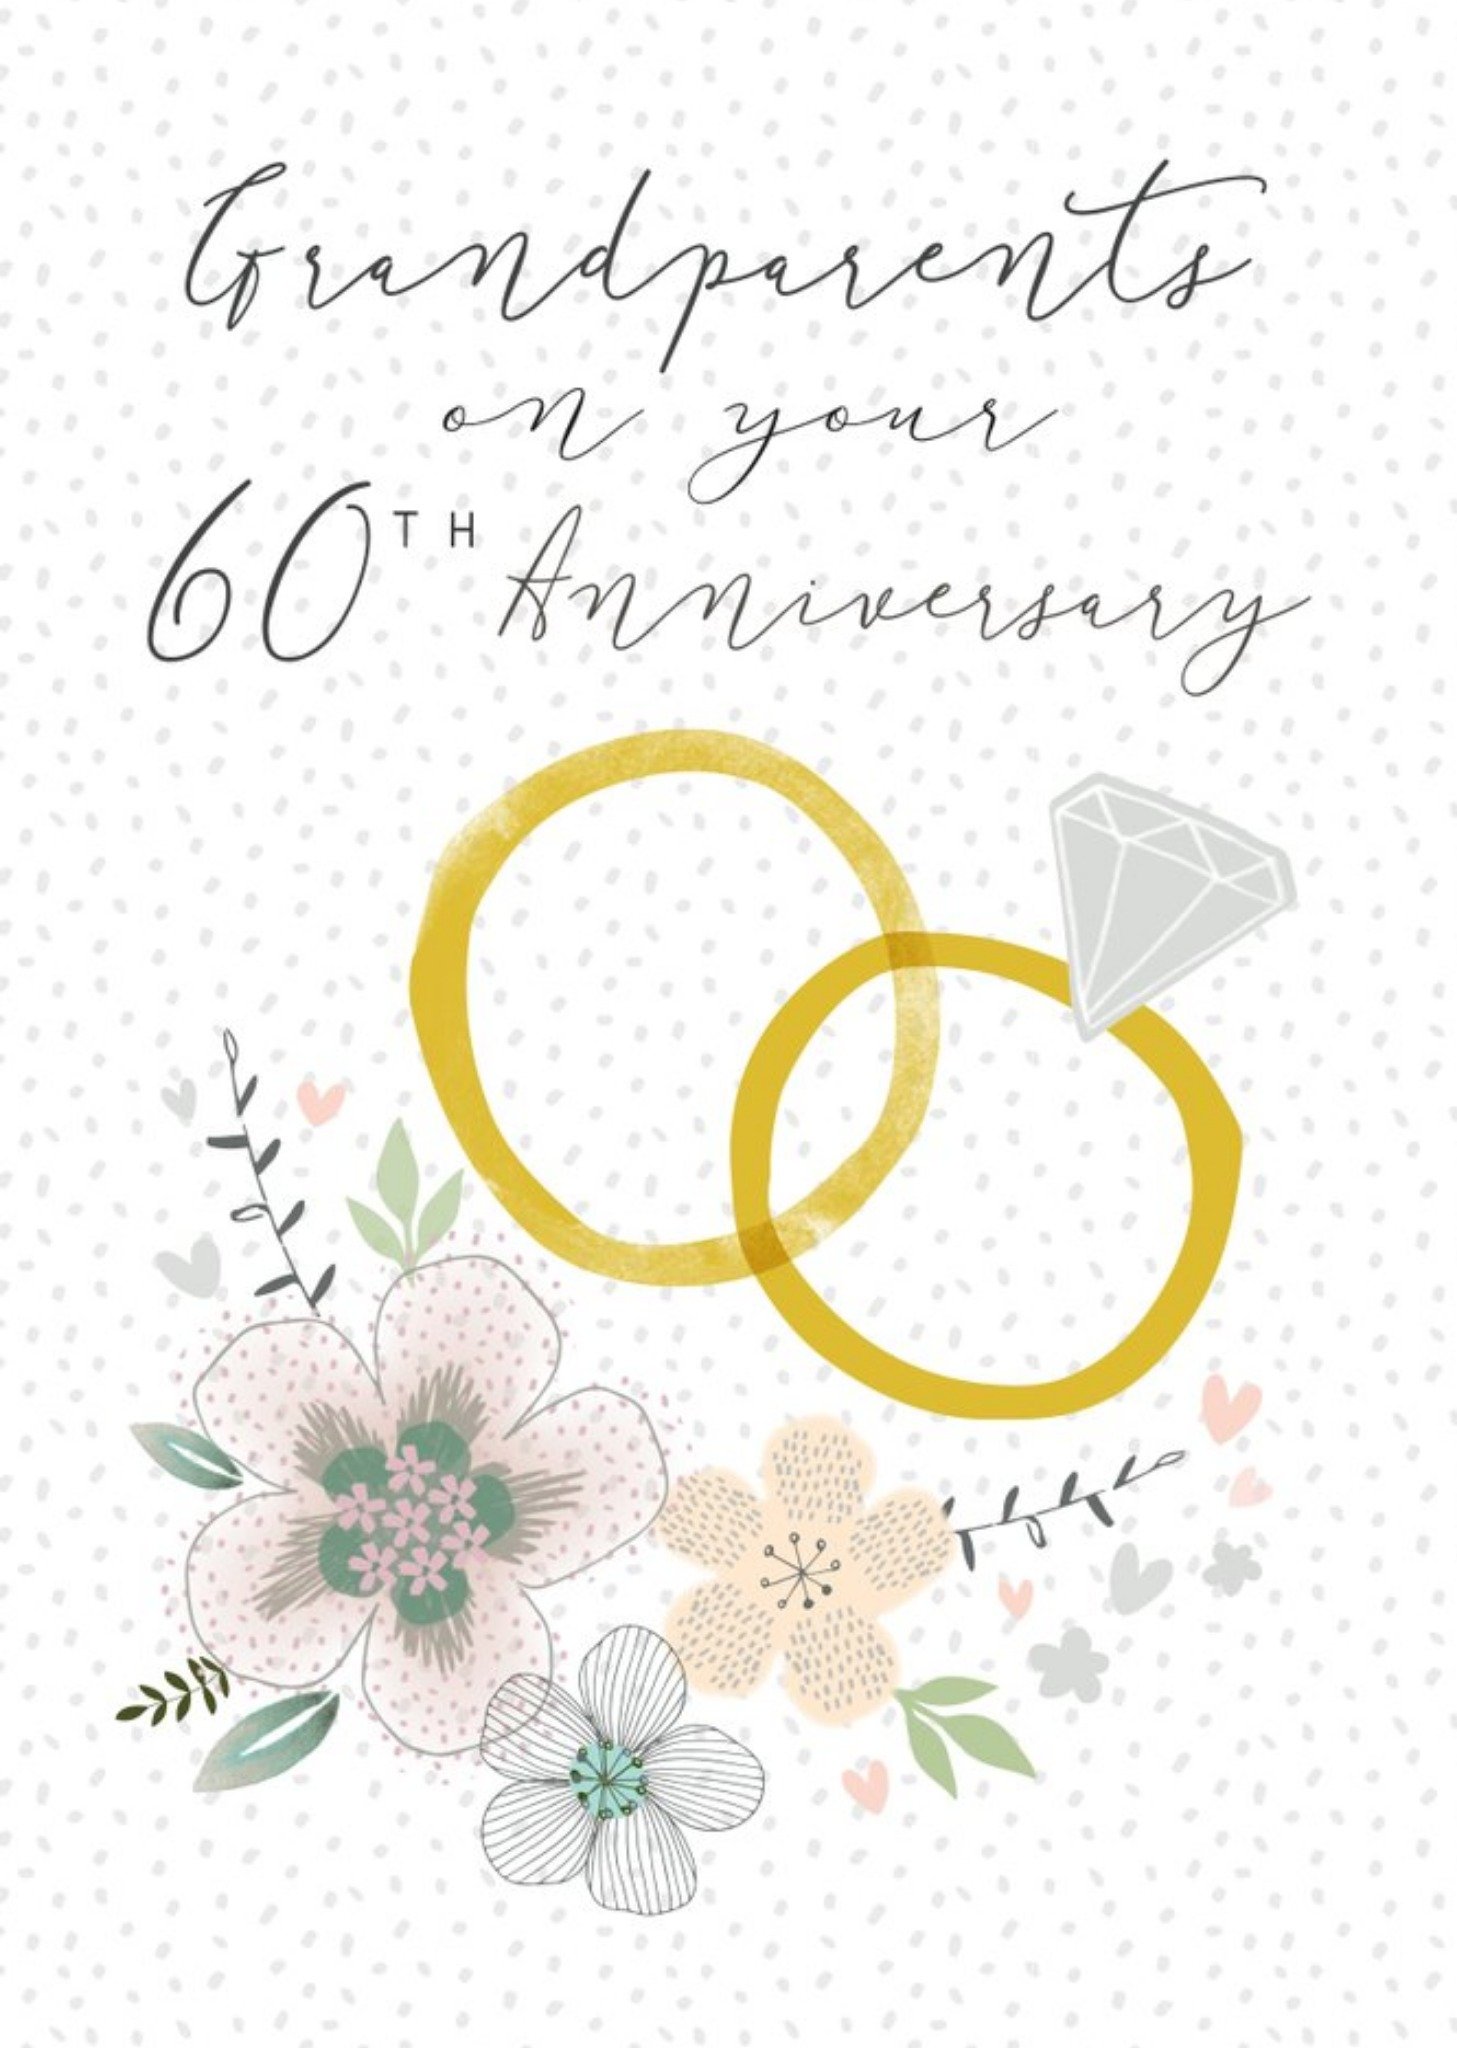 Moonpig Laura Darrington Illustrated Wedding Rings Grandparents 60th Anniversary Card, Large